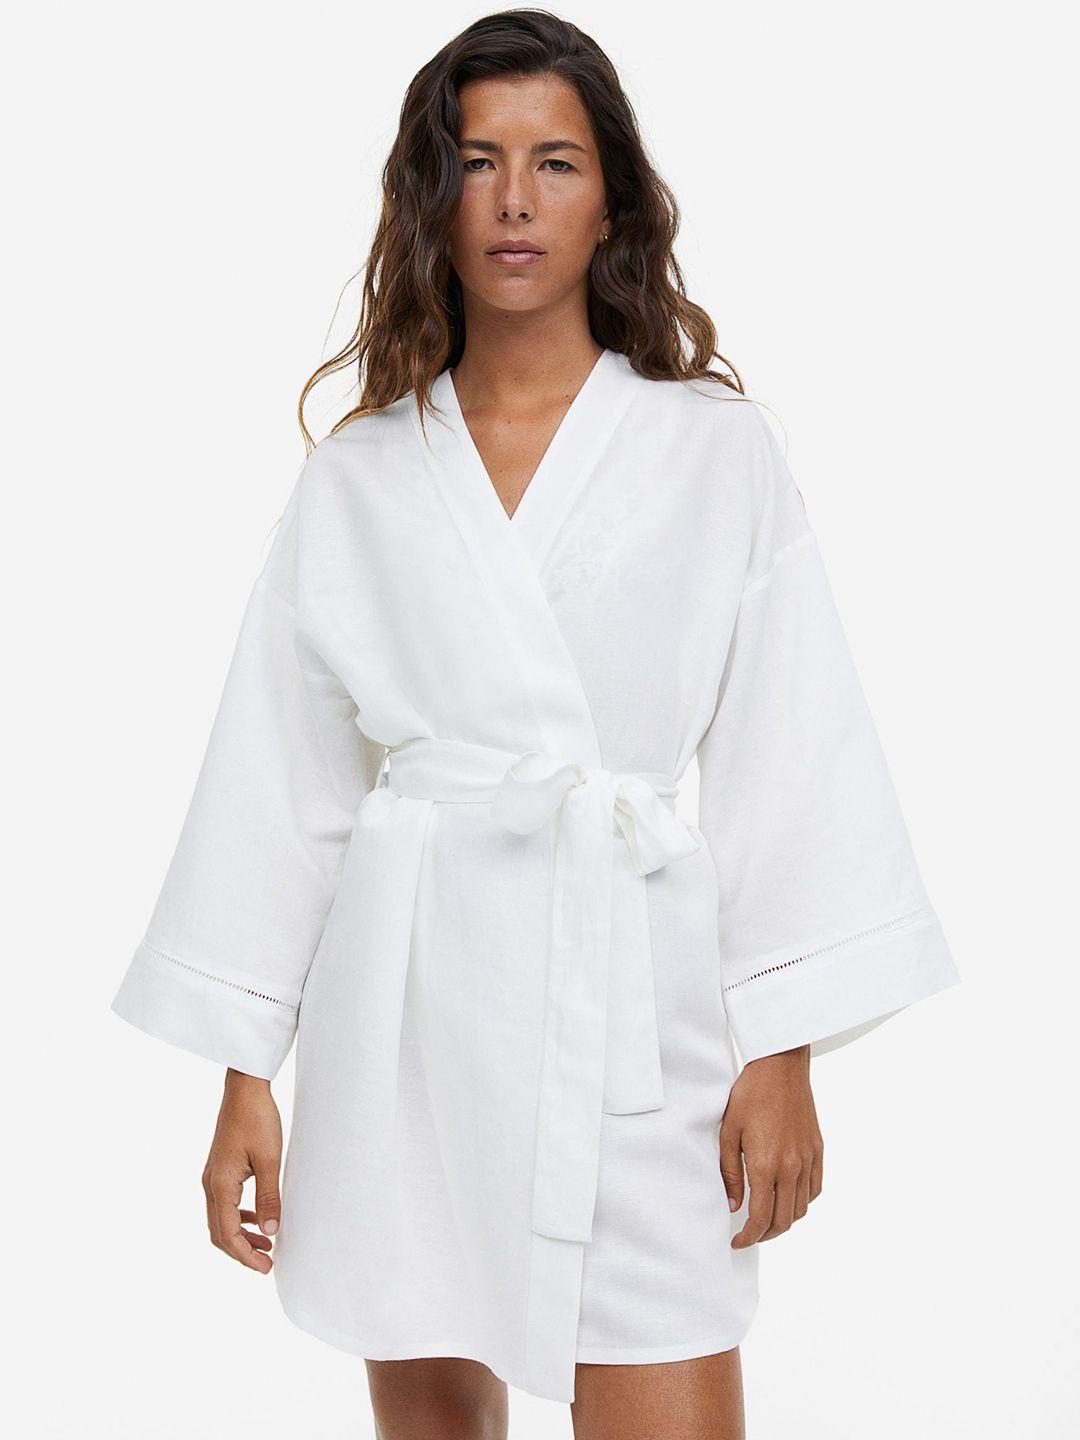 h&m-women-dressing-gown-robe